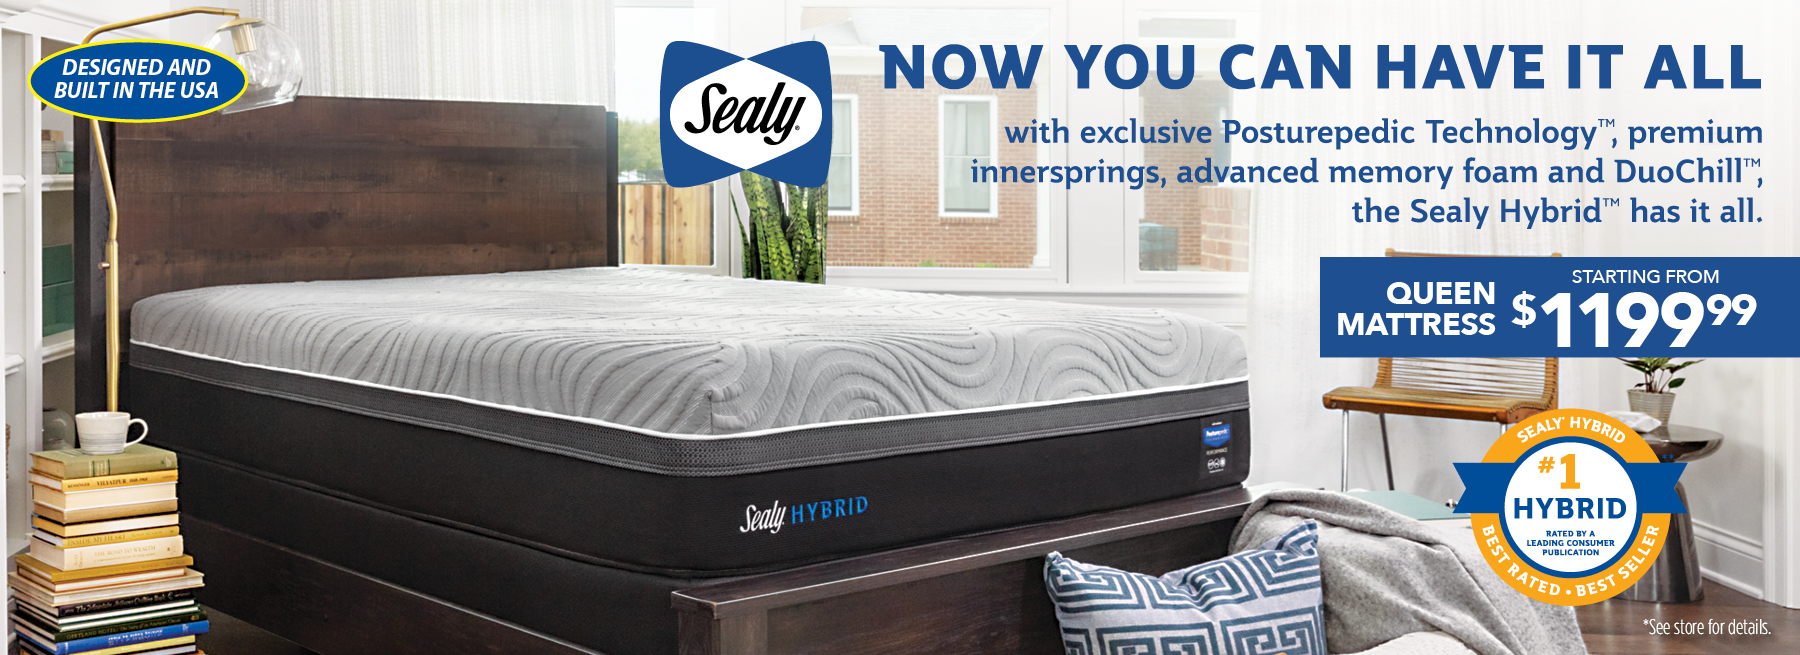 are sealy hybrid mattresses good